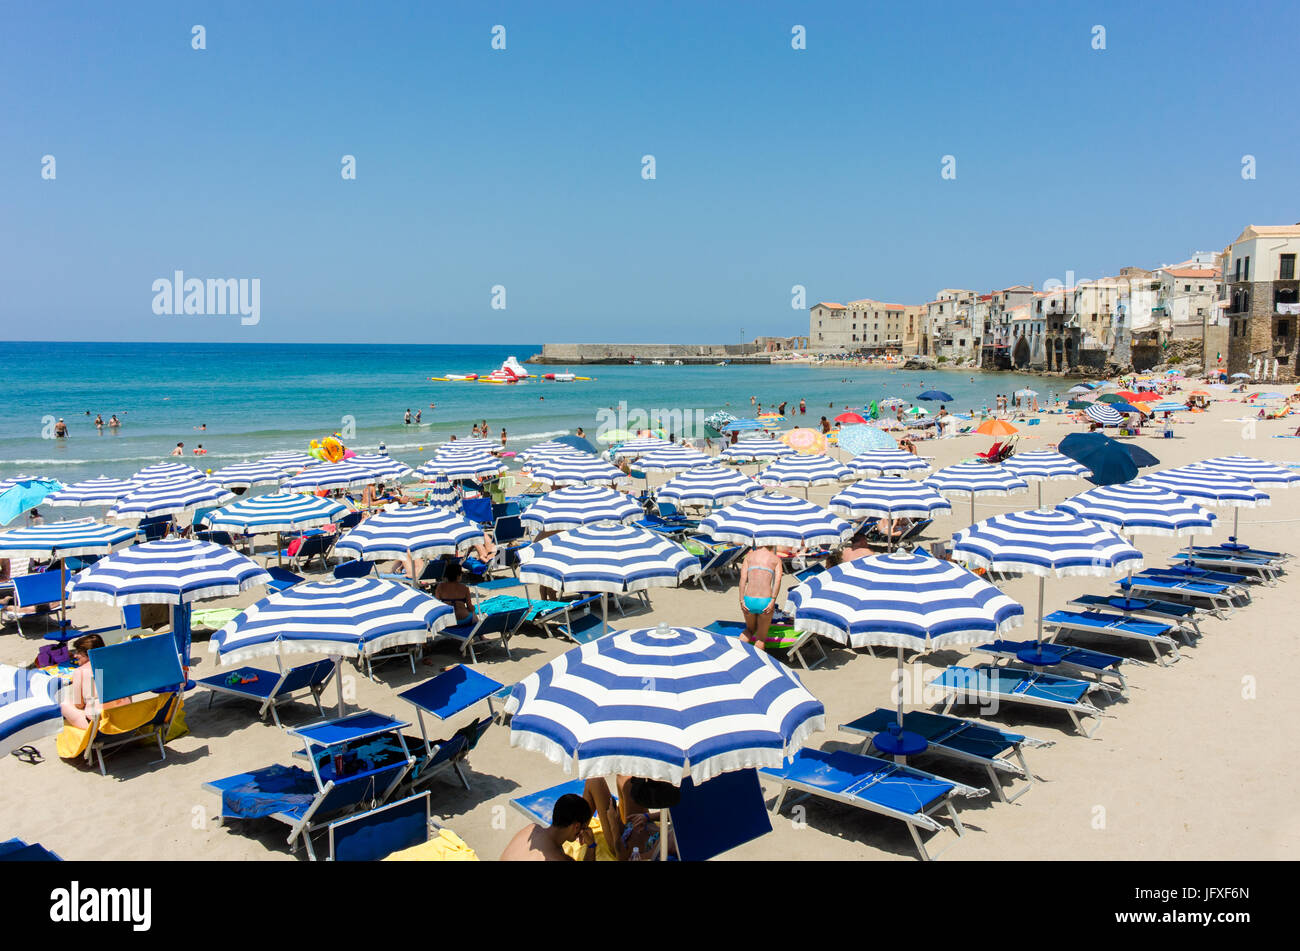 The beach in Cefalù, Sicily. Historic Cefalù is a major tourist destination on Sicily. Stock Photo